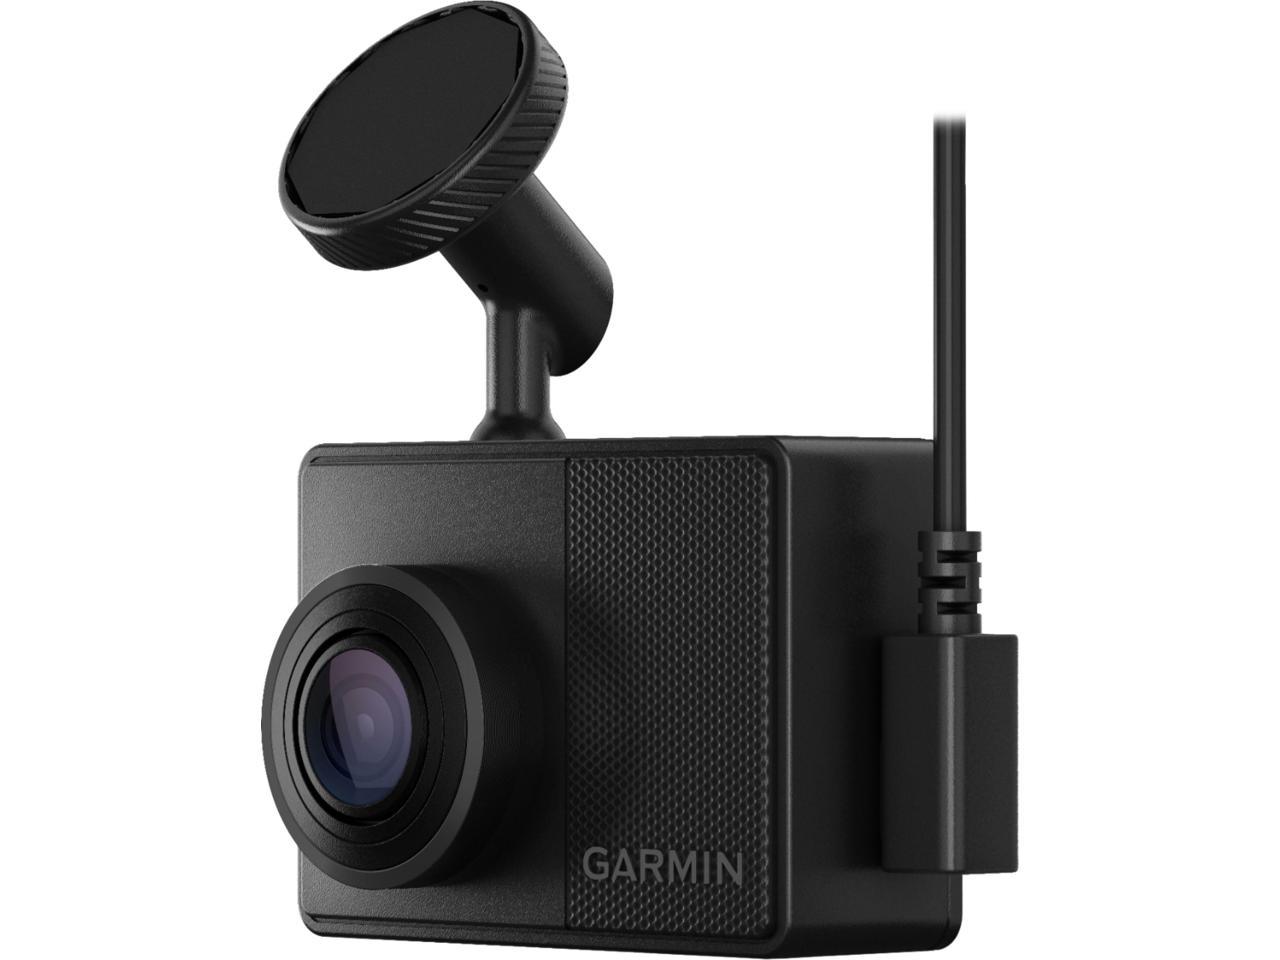 Garmin 67W 1440p Dash Cam, Black #010-02505-05 - image 8 of 21